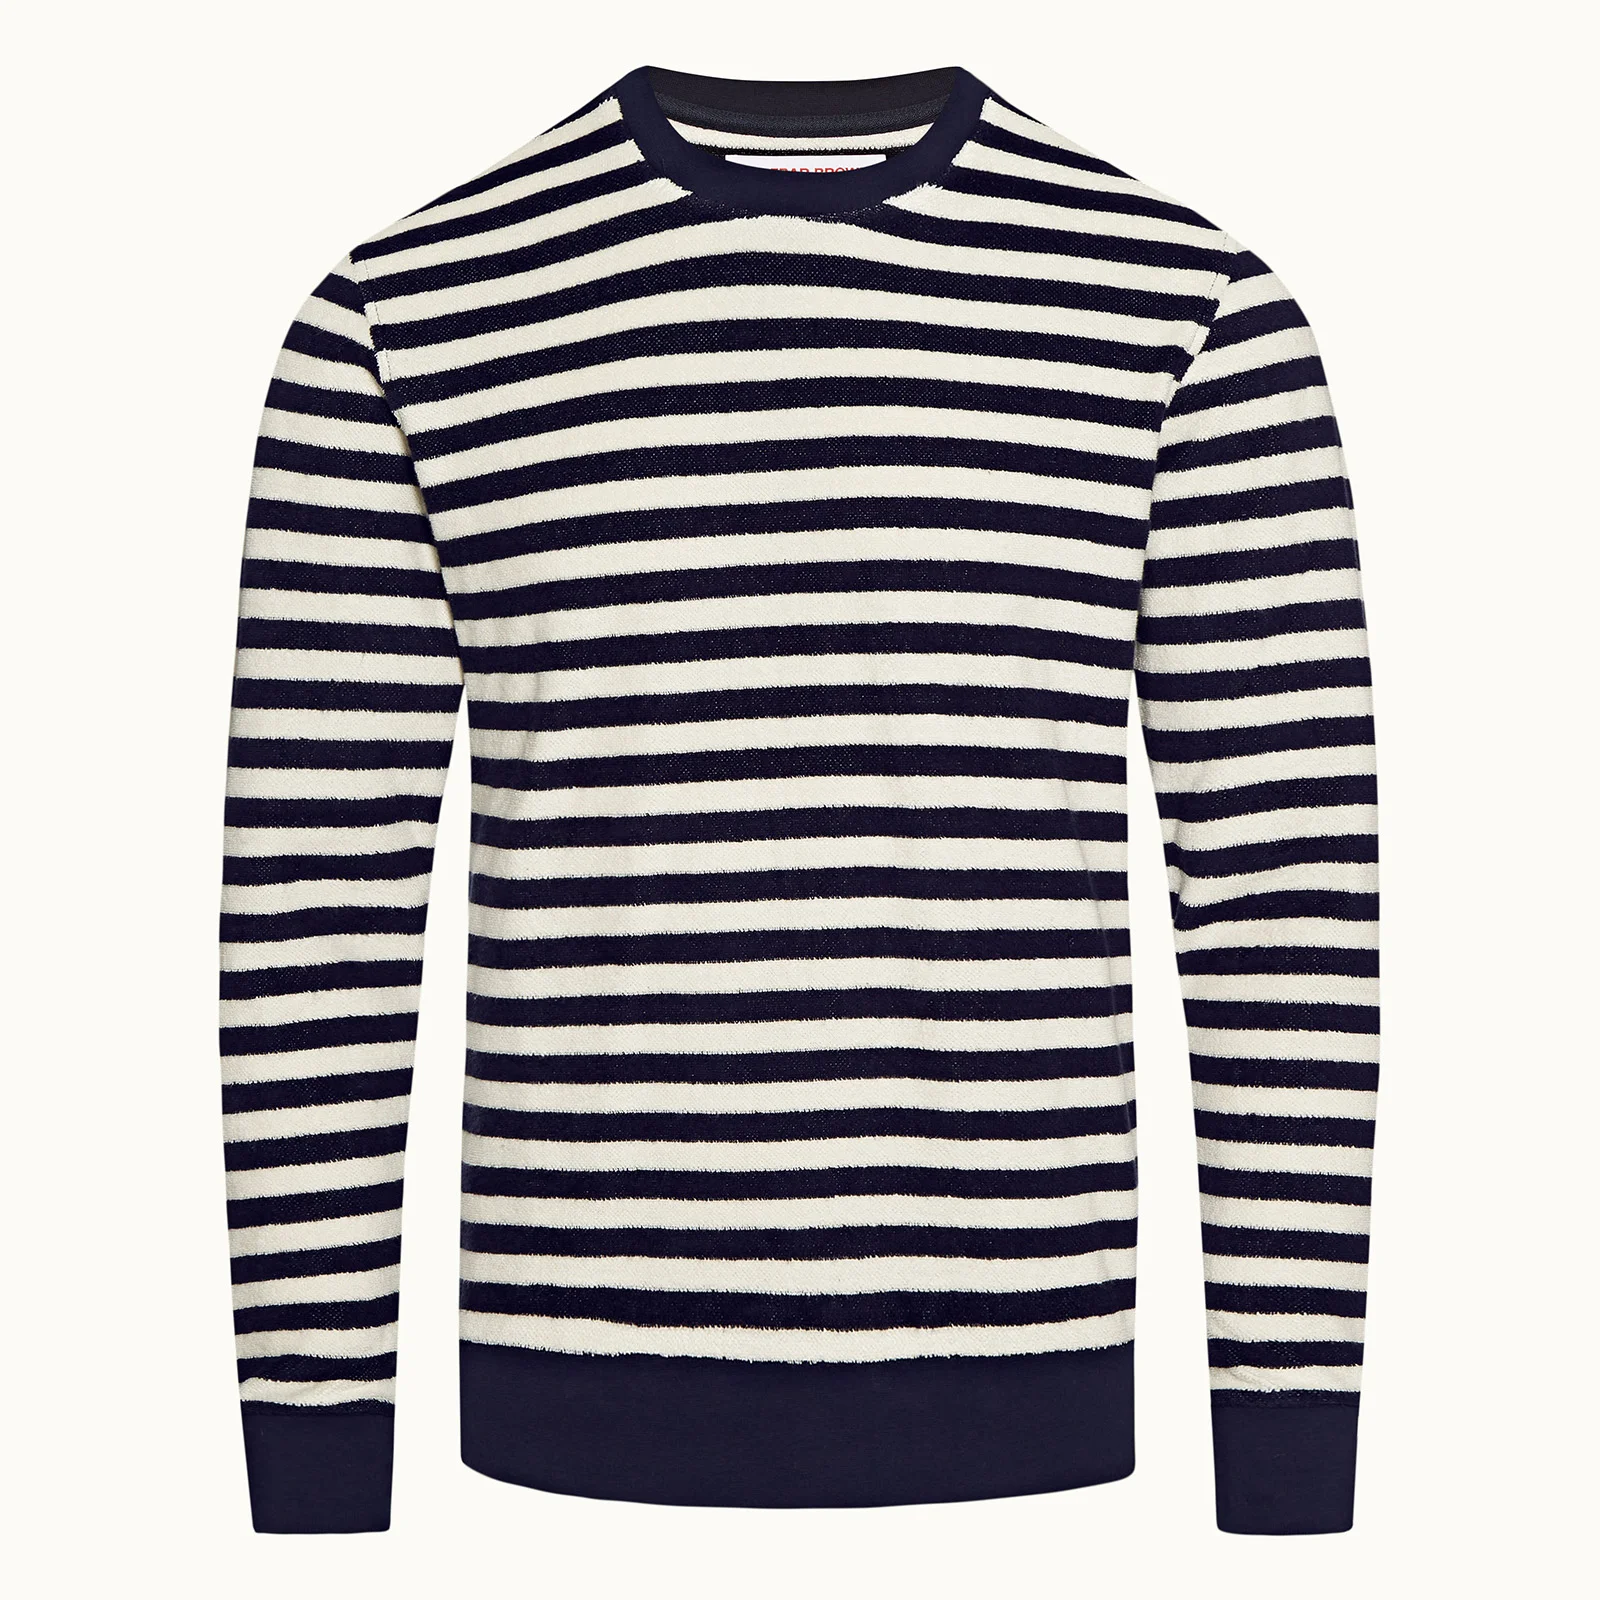 Orlebar Brown Men's Pierce Luxe Towelling Stripe Sweatshirt - Ink/White Sand Image 1